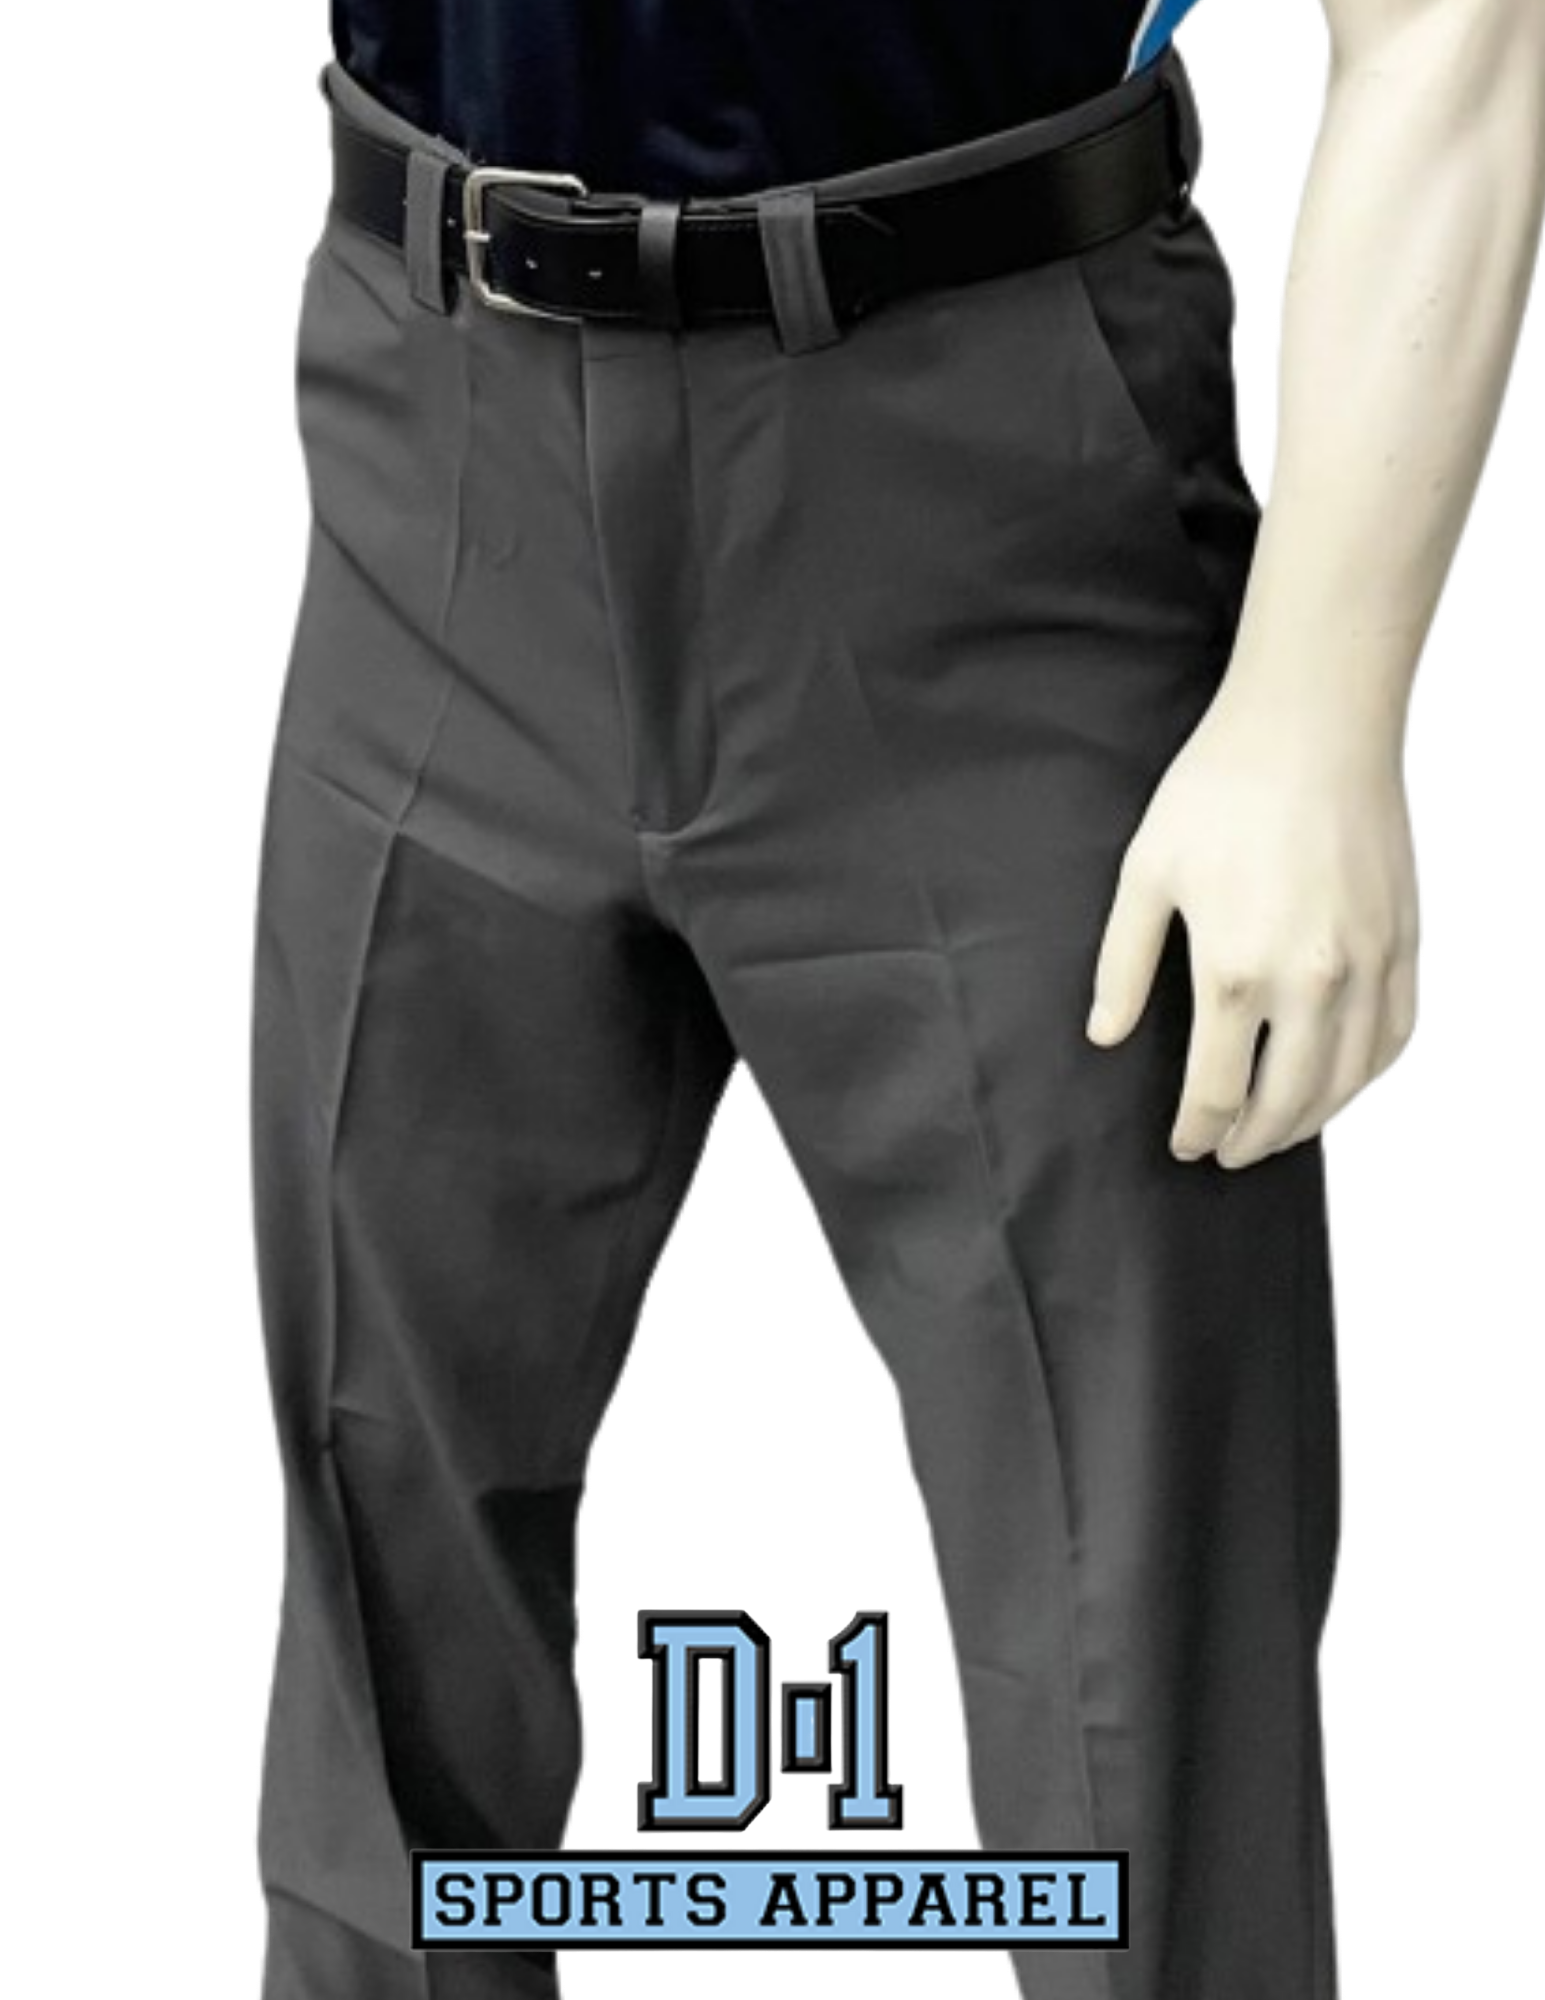 NCAA Men's 4-Way Stretch flat front COMBO pants EXPANDER WAISTBAND - Charcoal Grey